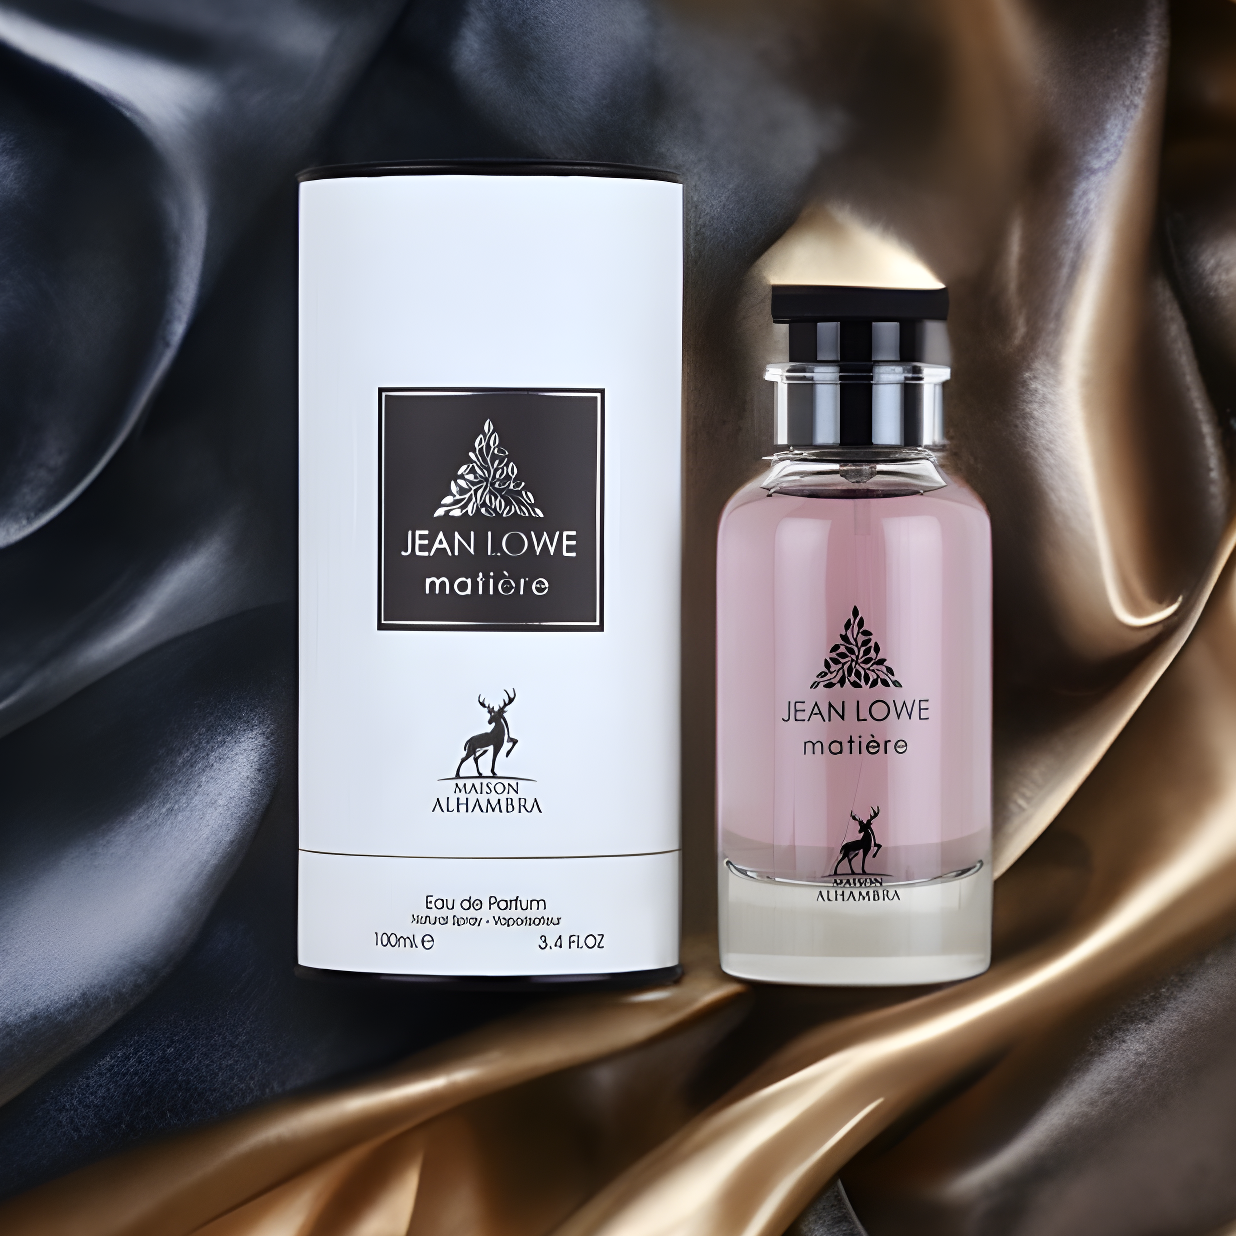 Jean Lowe Nouveau EDP Perfume By Maison Alhambra 100 ML